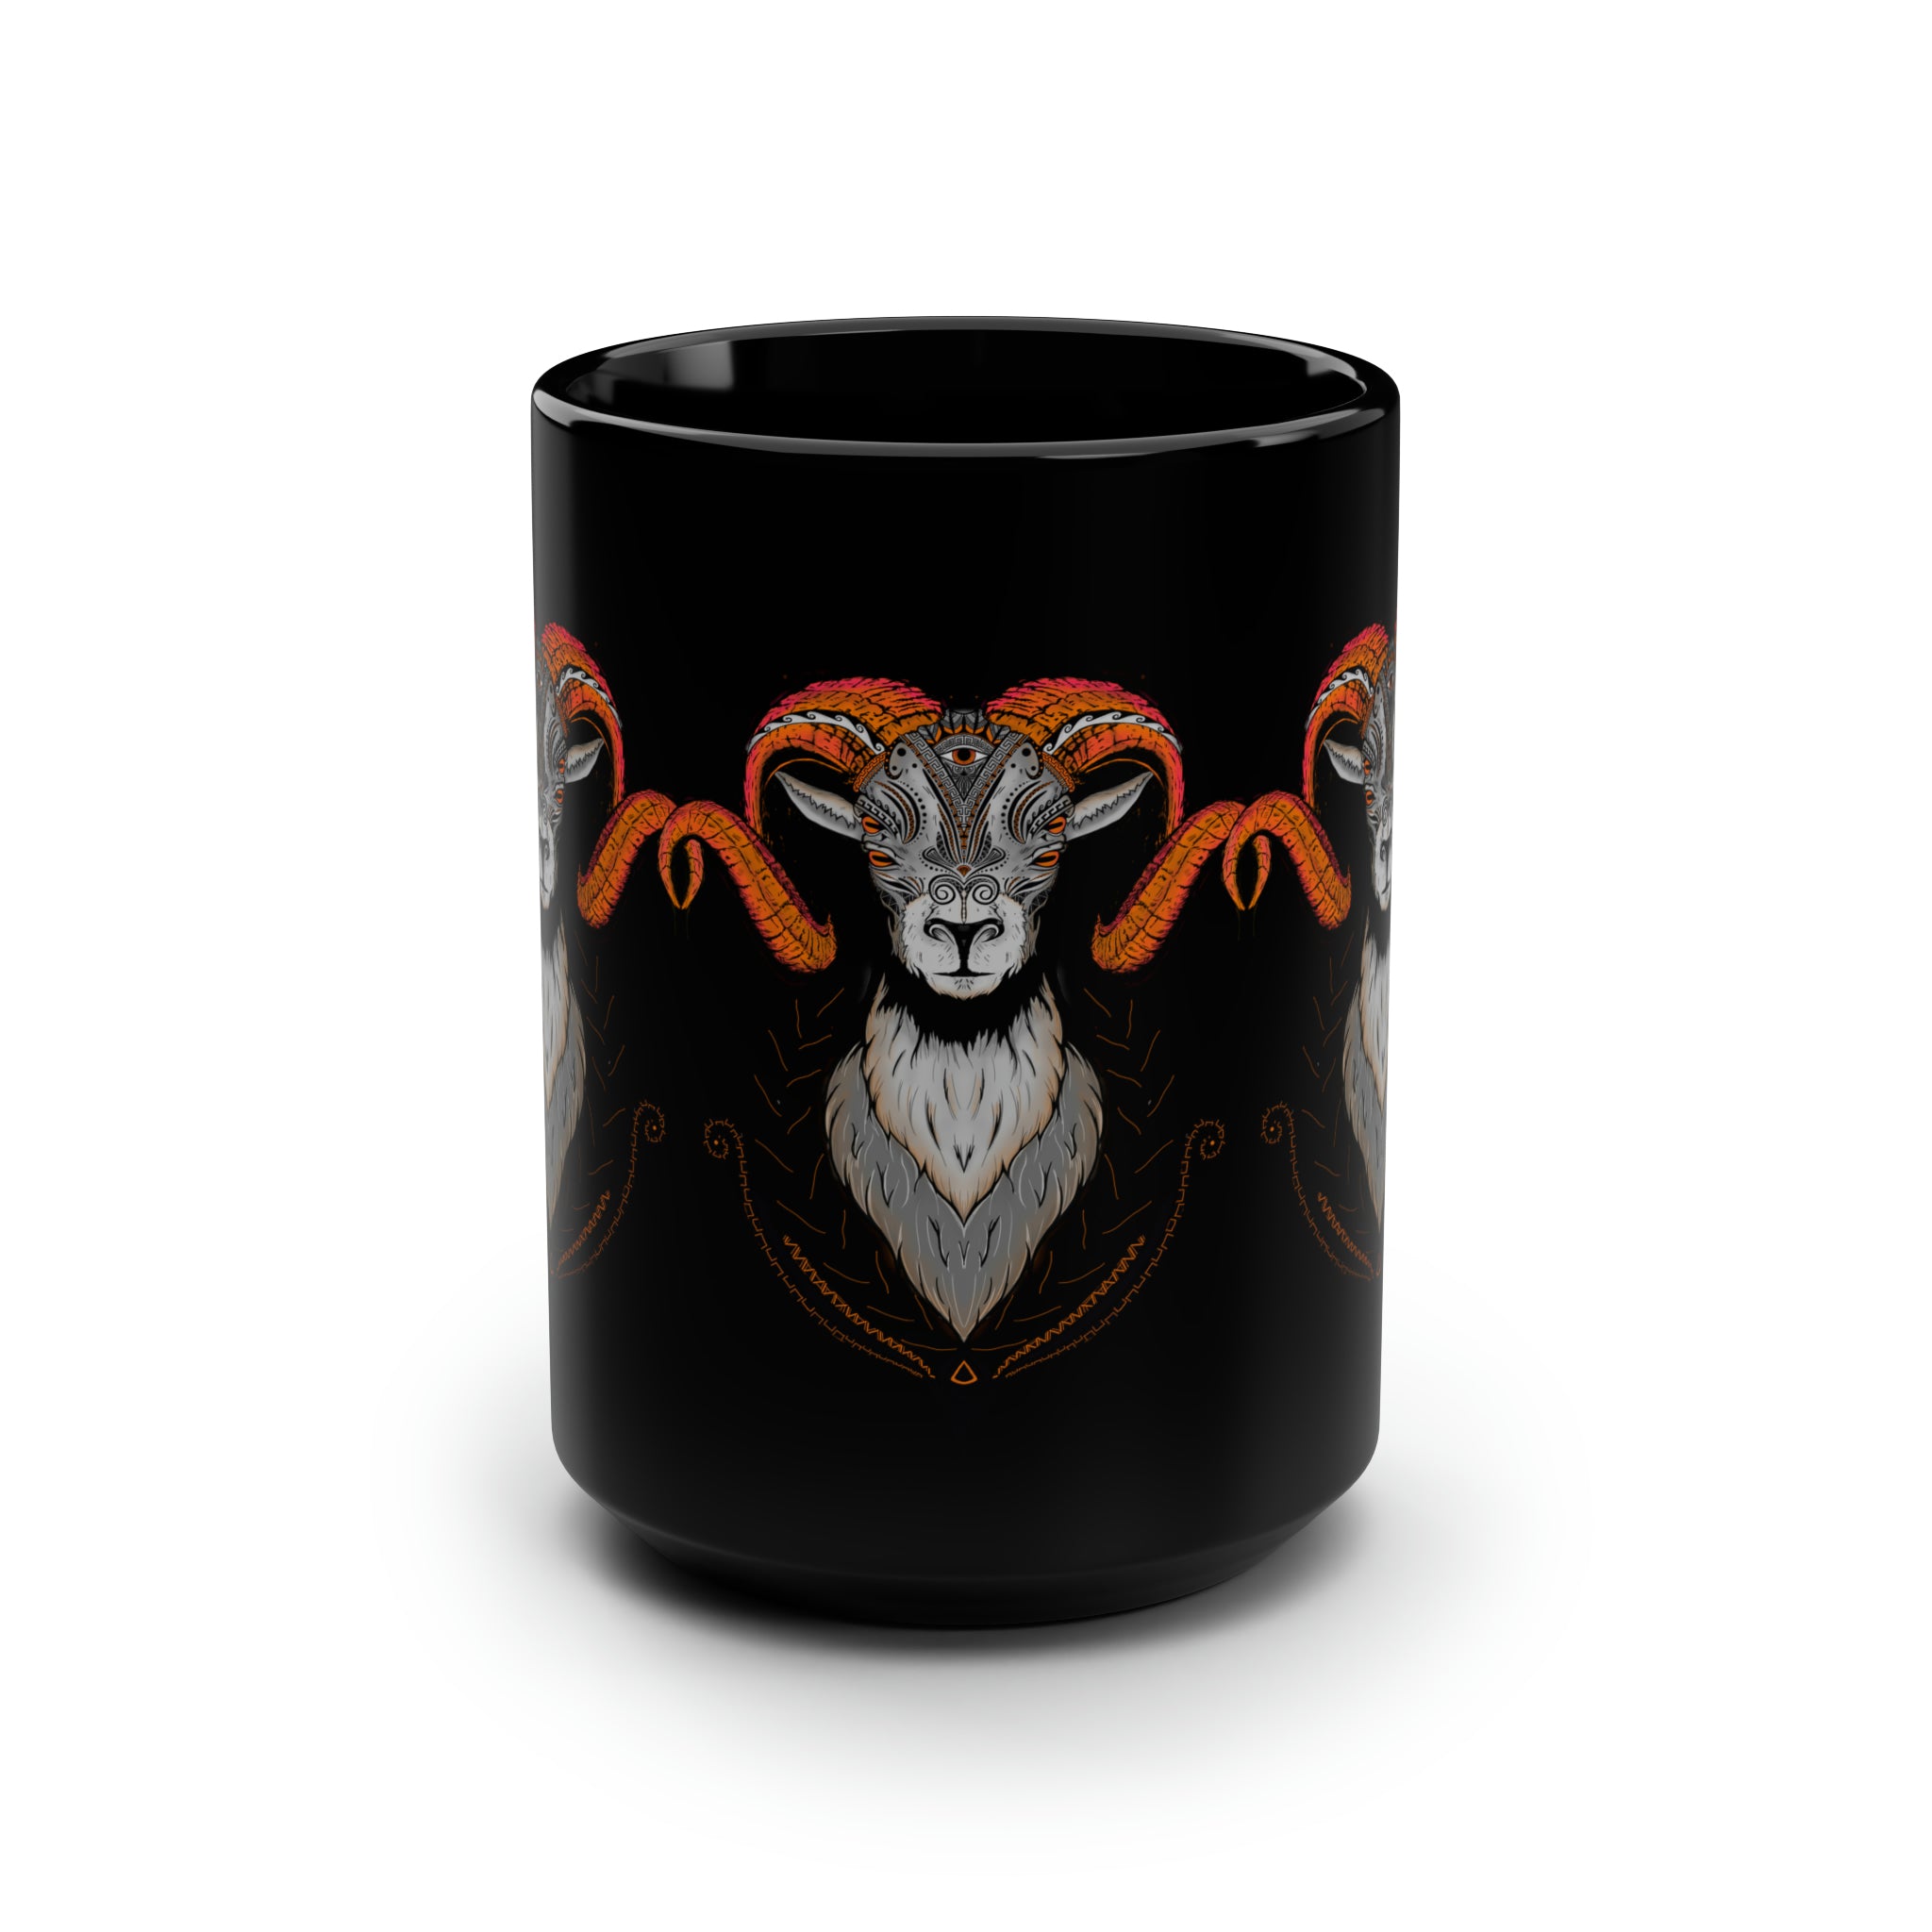 Ram of Aries Mug